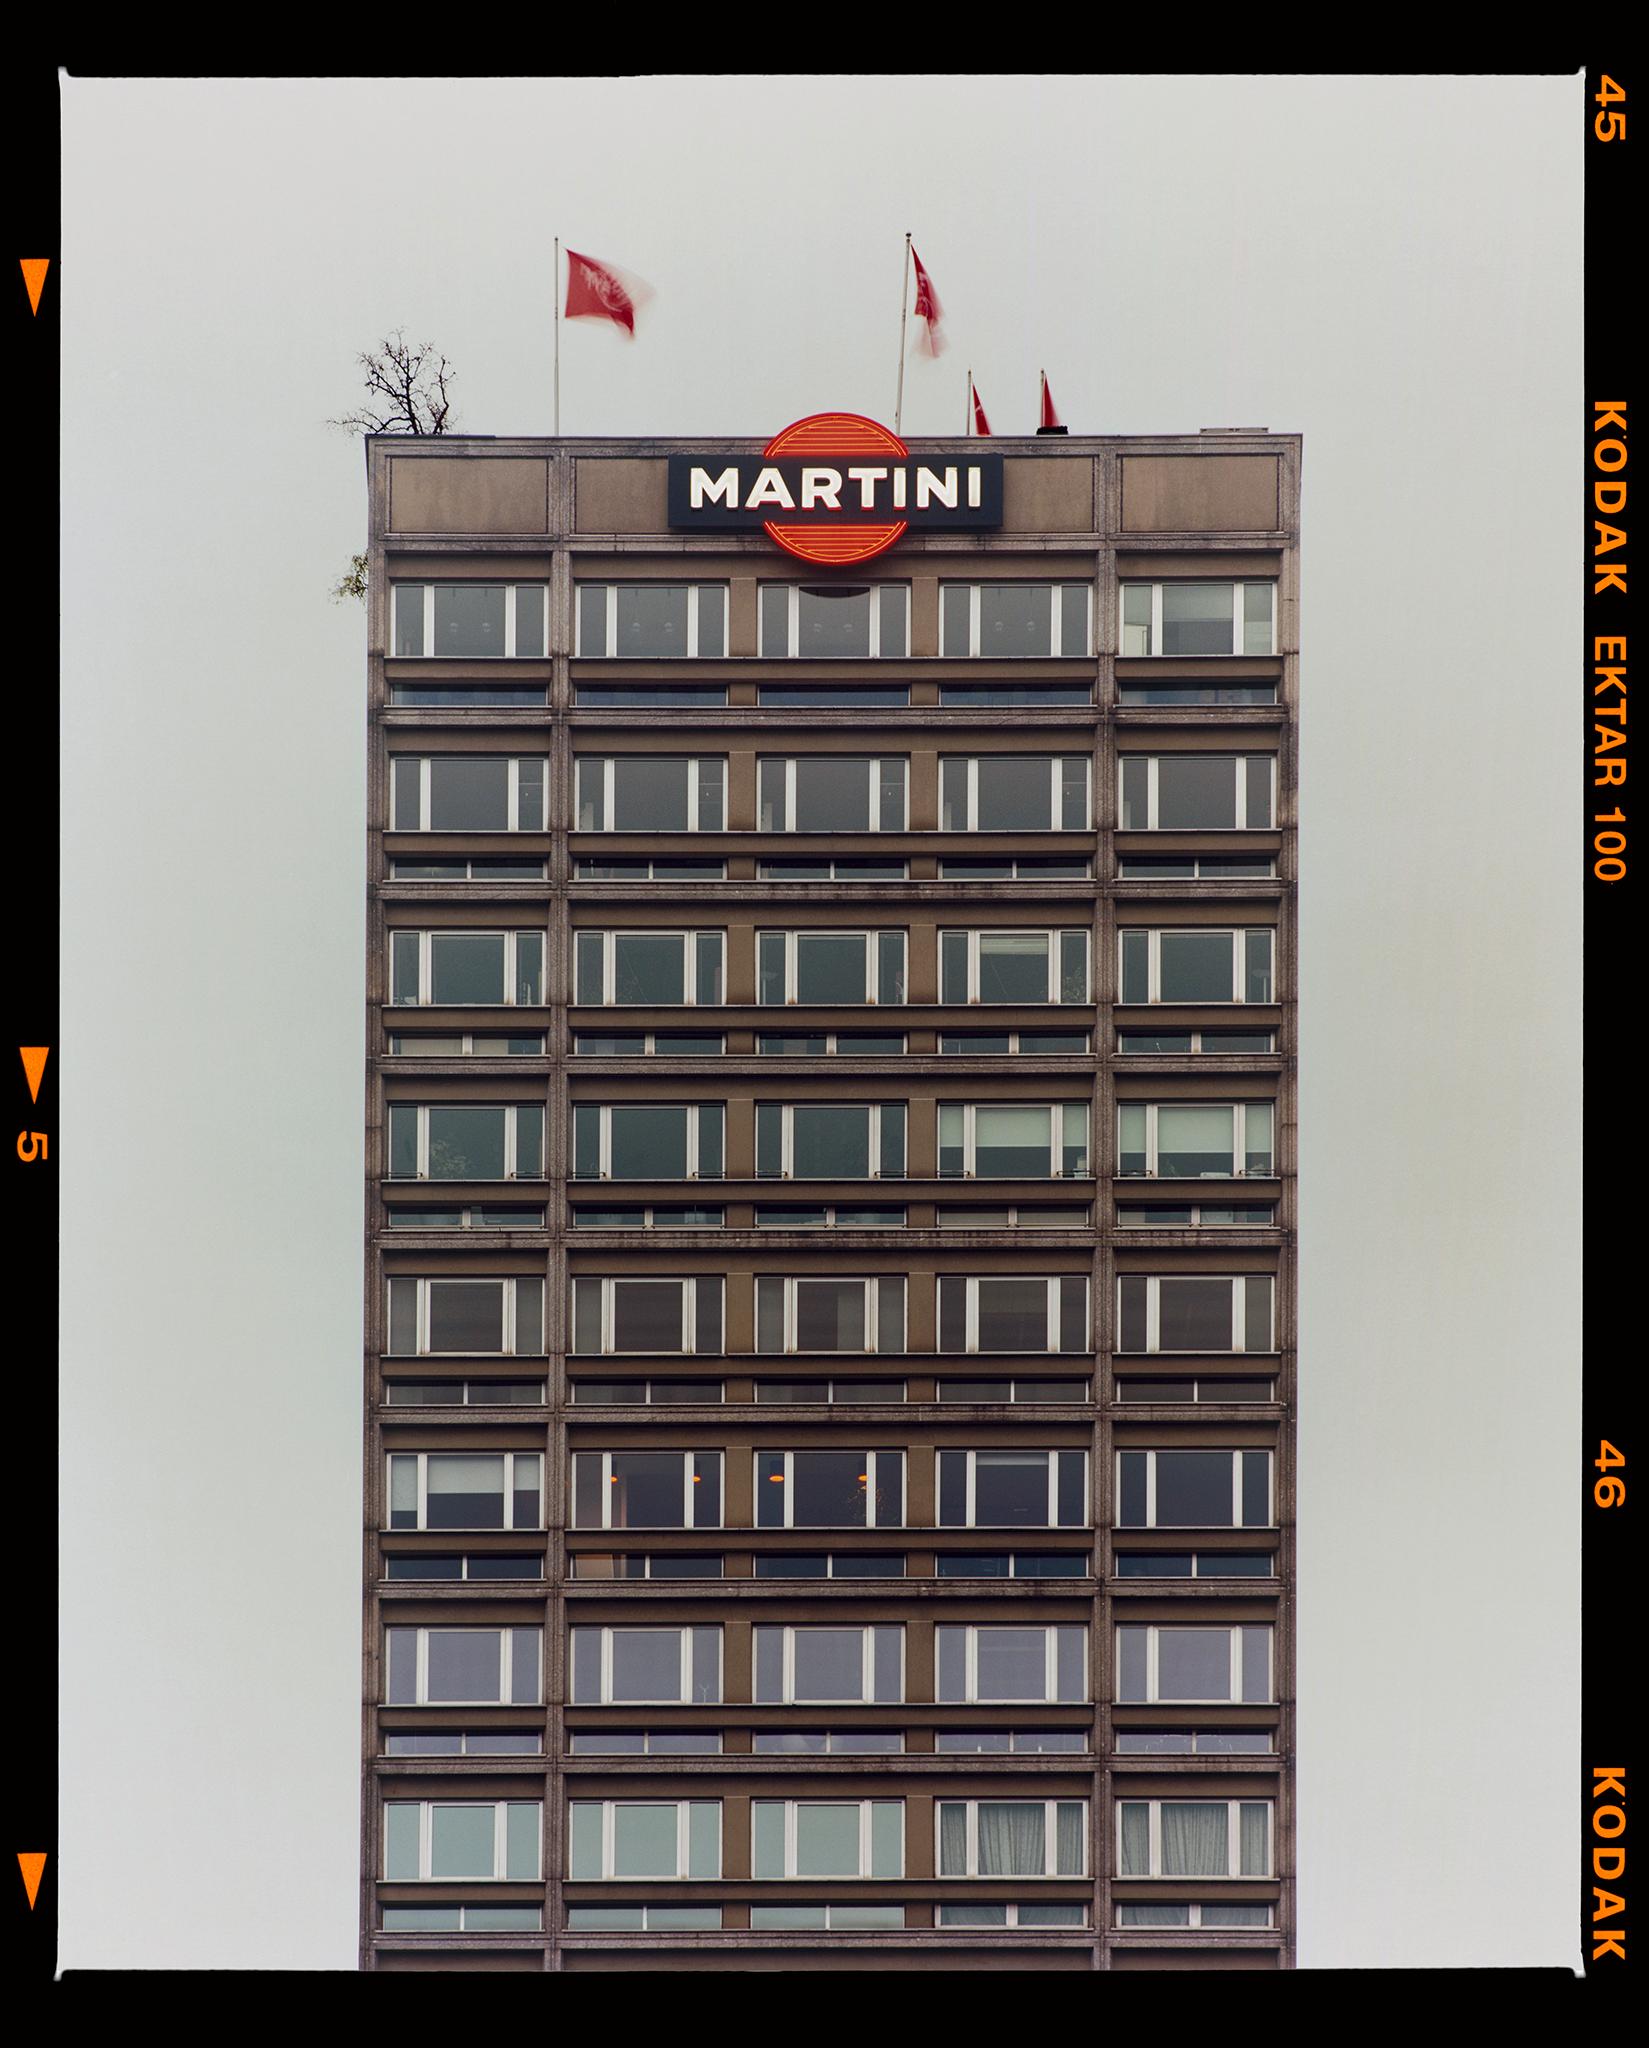 Grey Martini, Milan - Italian Architecture Street Photography 